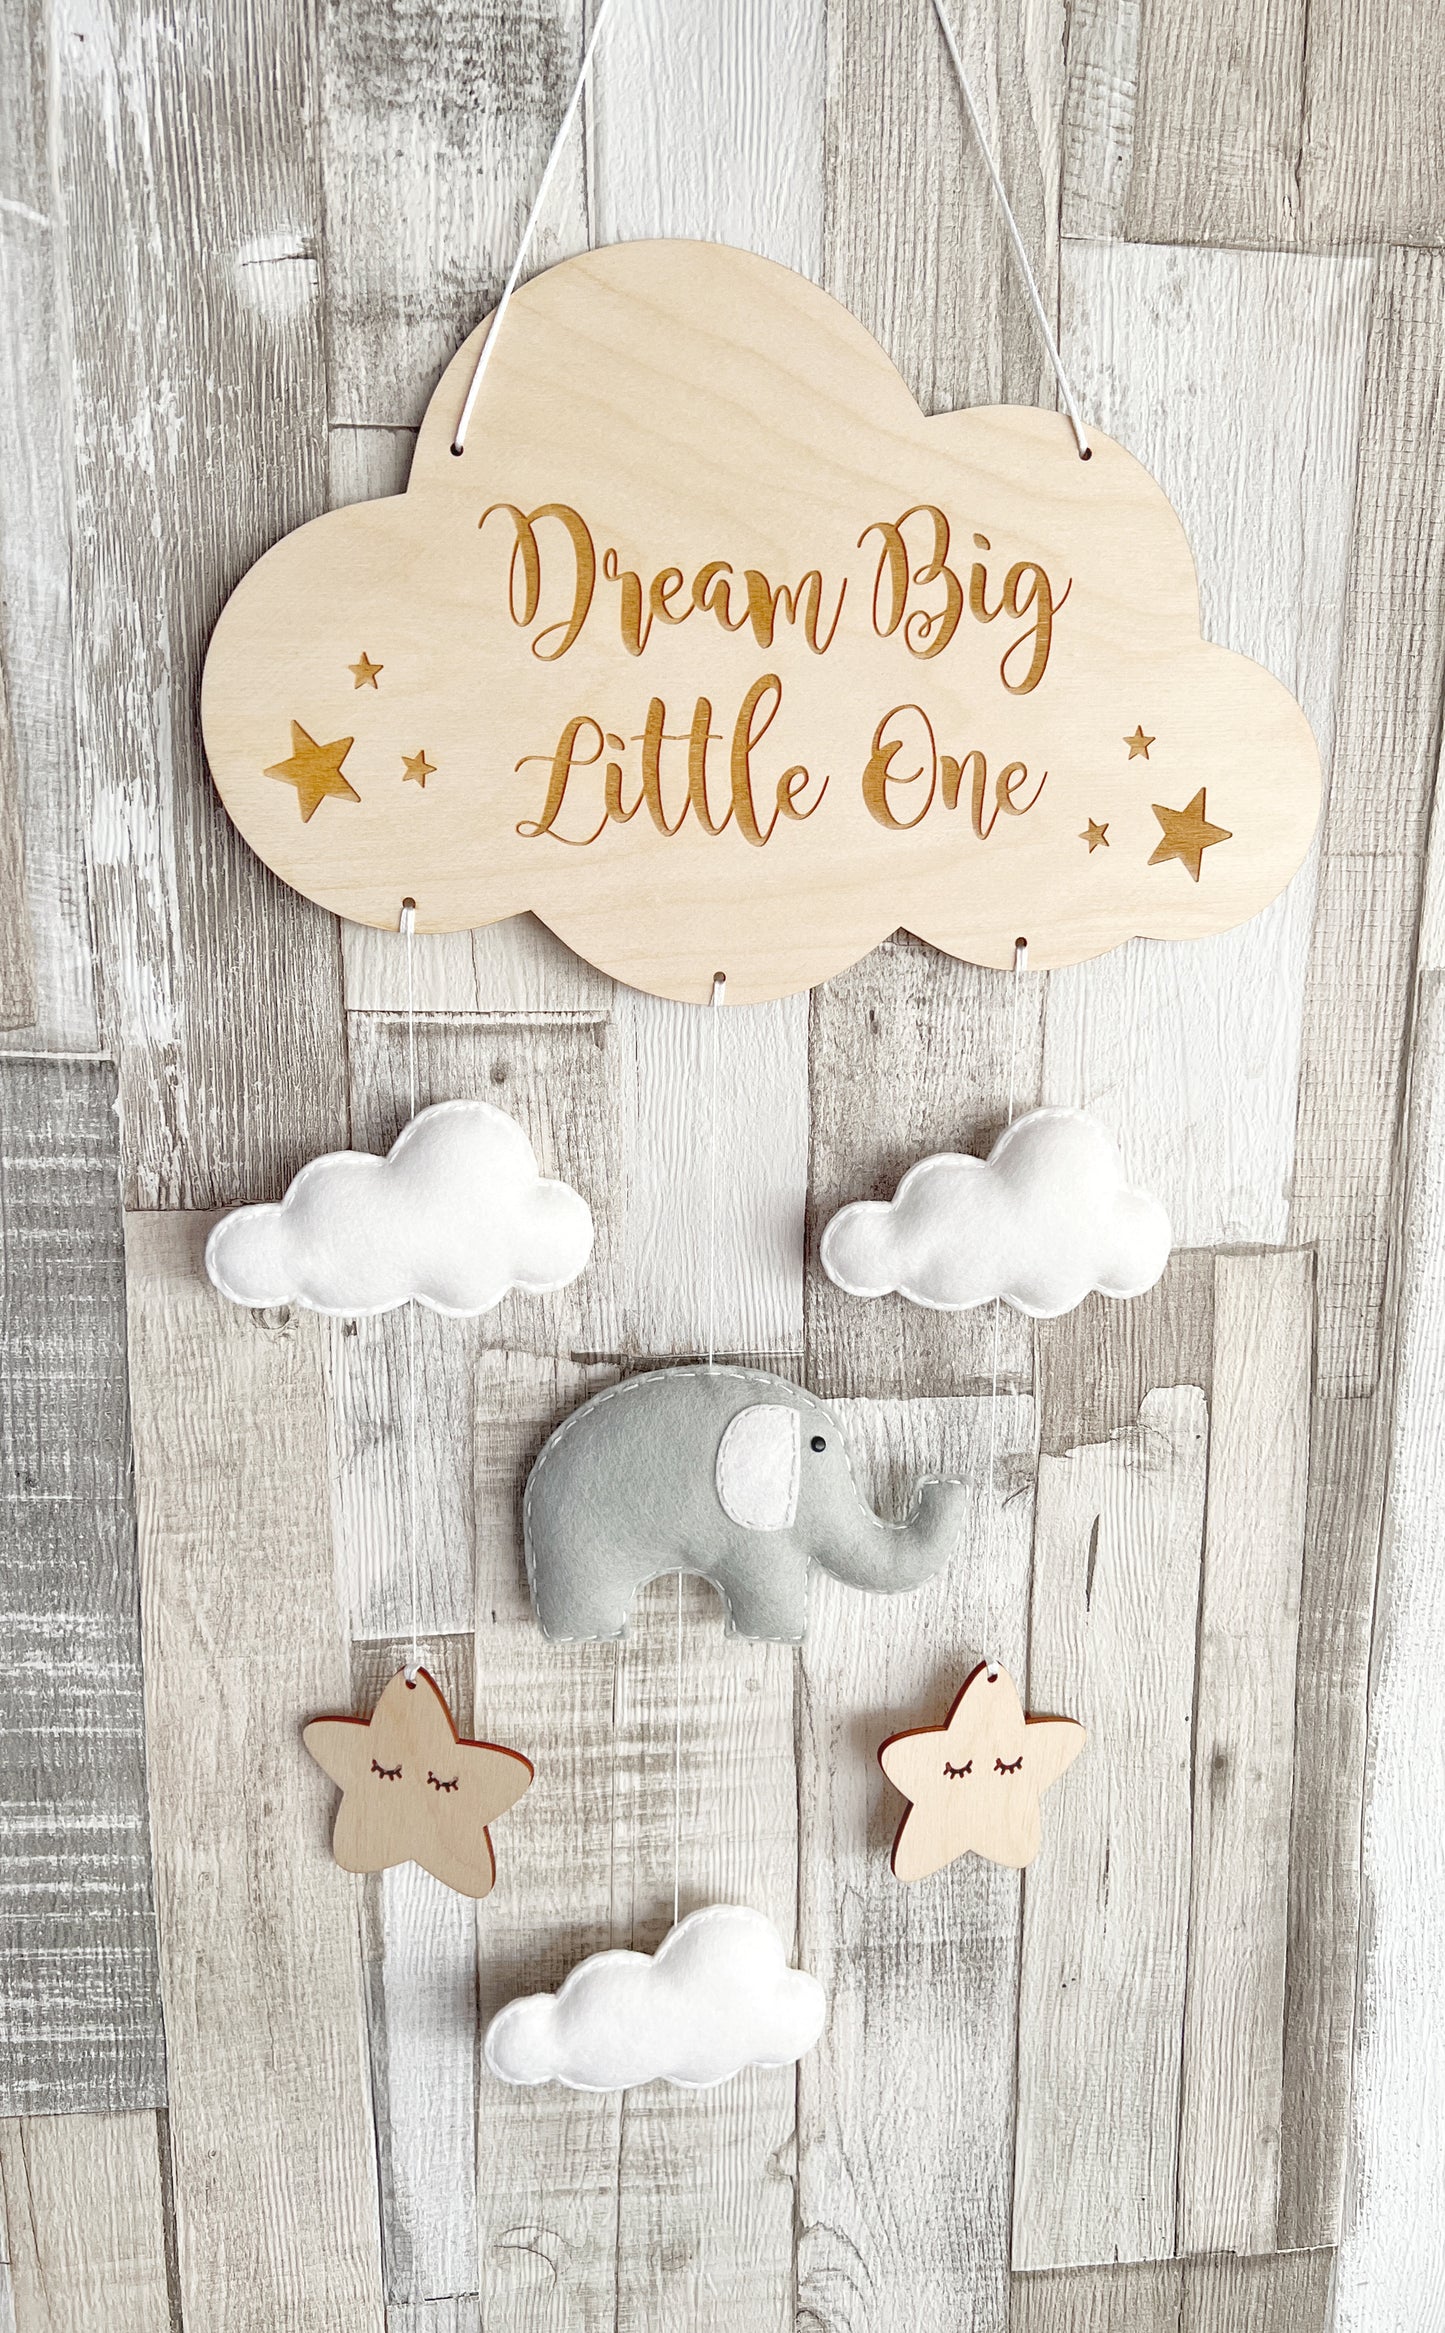 Dream Big Little One Cloud Wall Mobile - Elephant, Clouds & Sleepy Stars